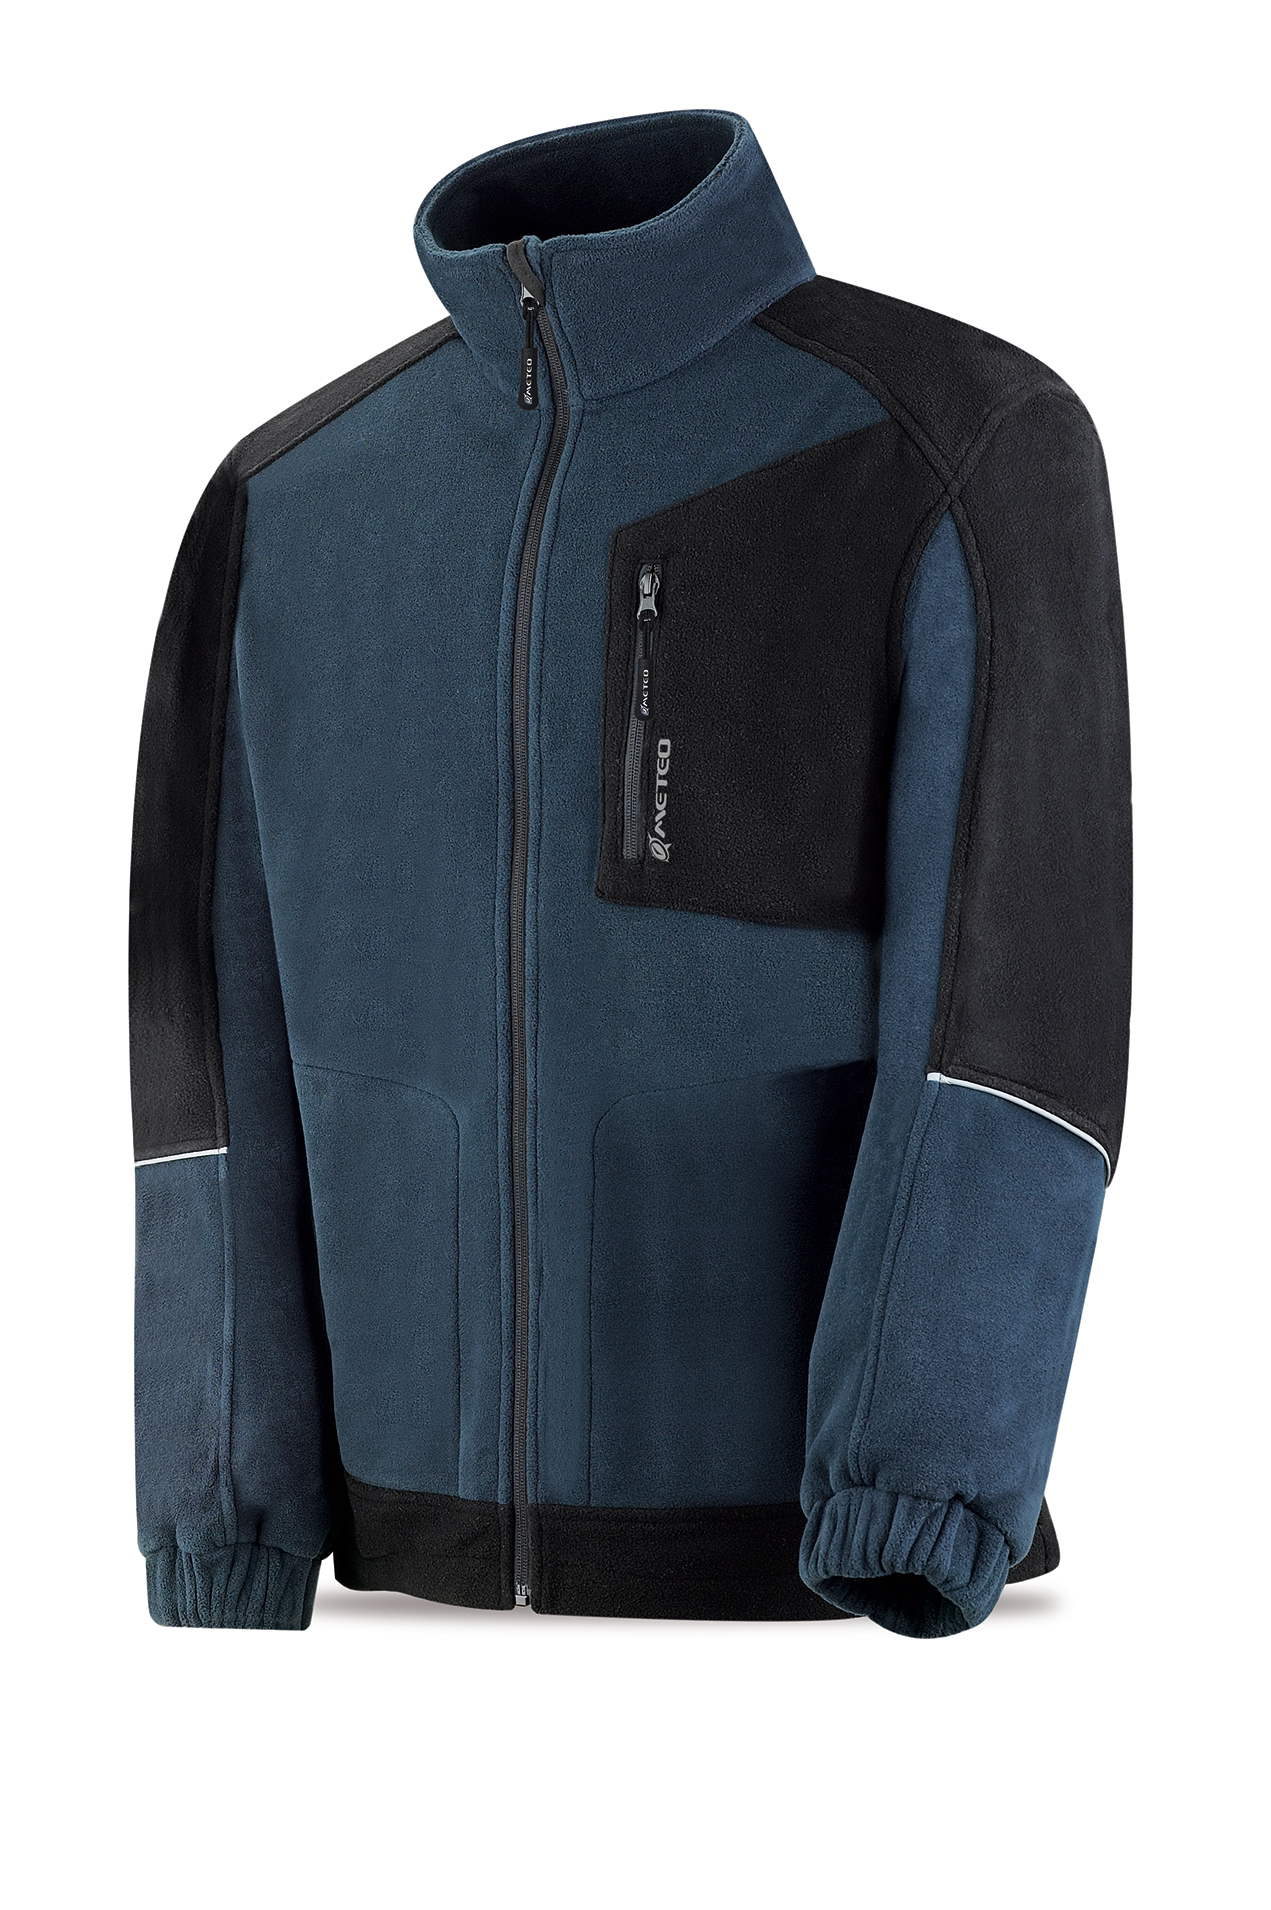 288-CHPPAN Coats and Rain Gear Solar Jackets VIRACOCHA model fleece jacket. Color Navy Blue/Black.